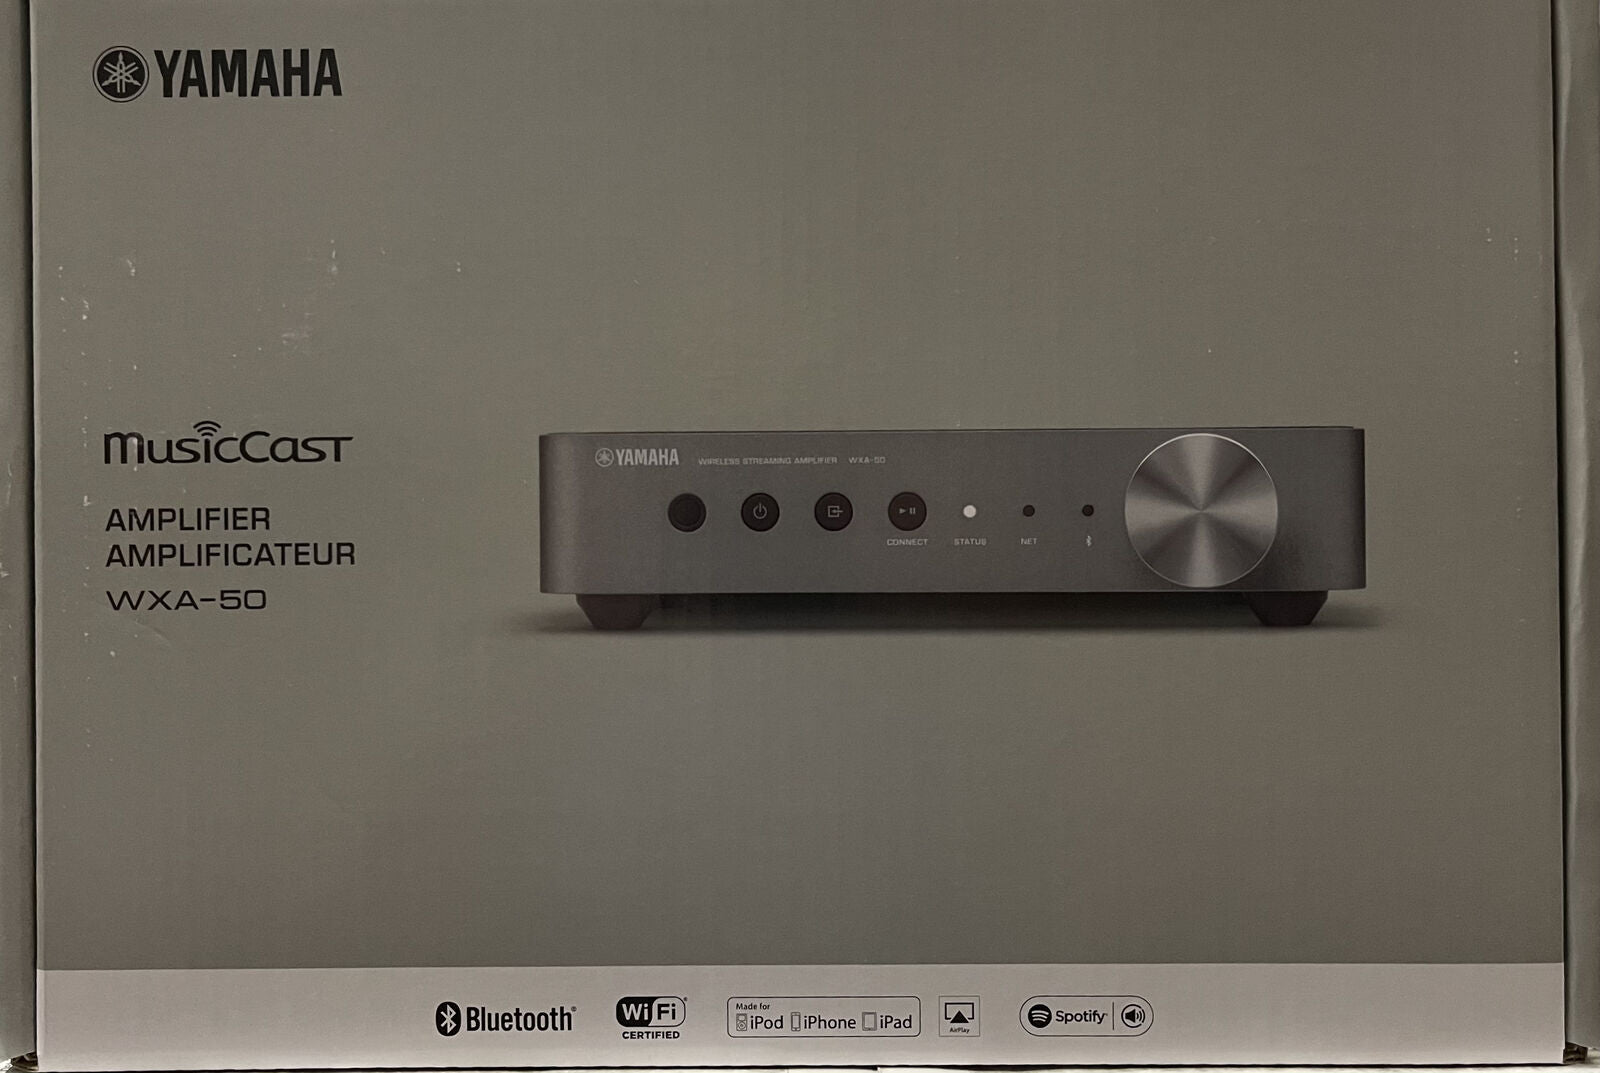 Yamaha WXA-50 MusicCast wireless streaming amplifier with Wi-Fi